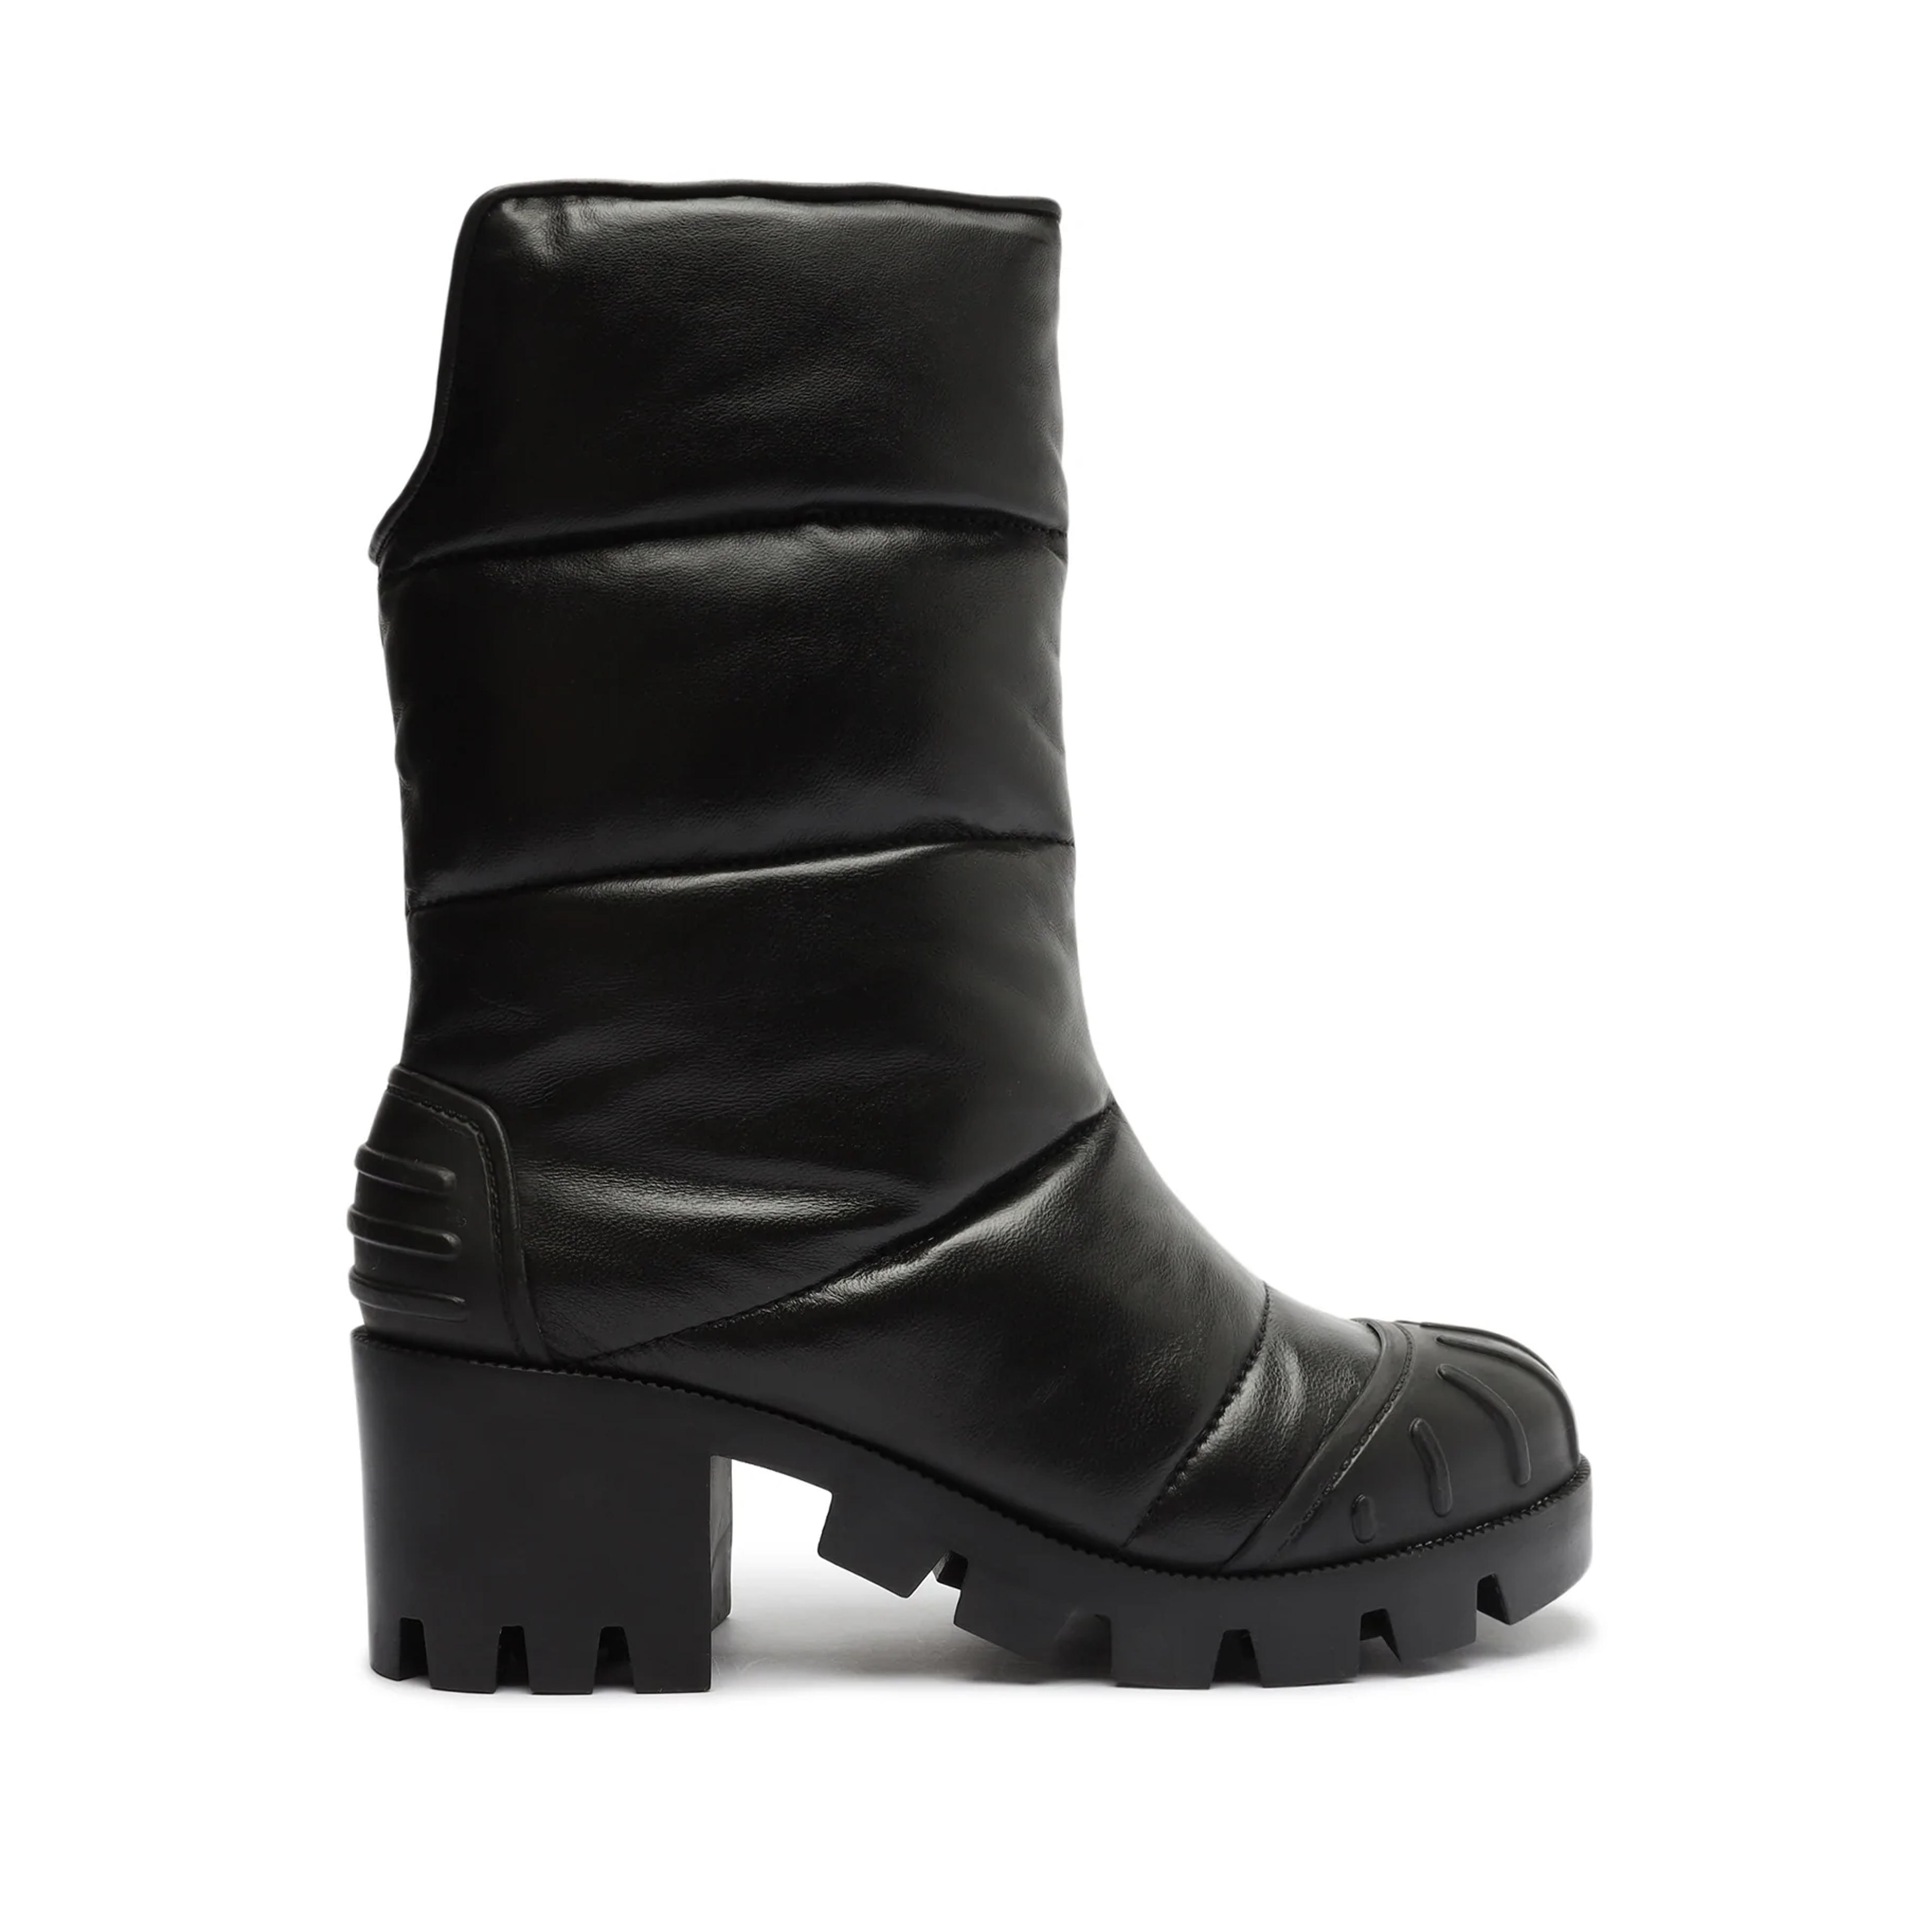 Eugenia Nappa Leather Boot - 8.5 / Black / Nappa Leather